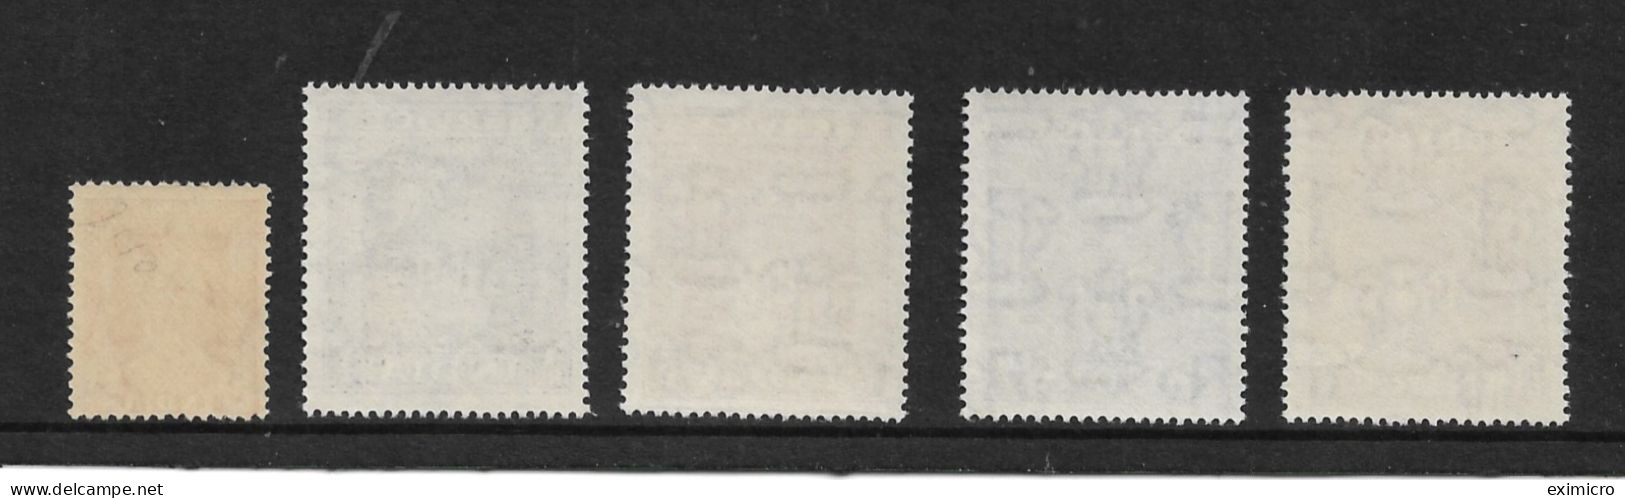 INDIA 1950 - 1951 OFFICIALS 3a, 1R - 10R SG O156, O161 - O164 UNMOUNTED MINT Cat £27.75 - Dienstzegels